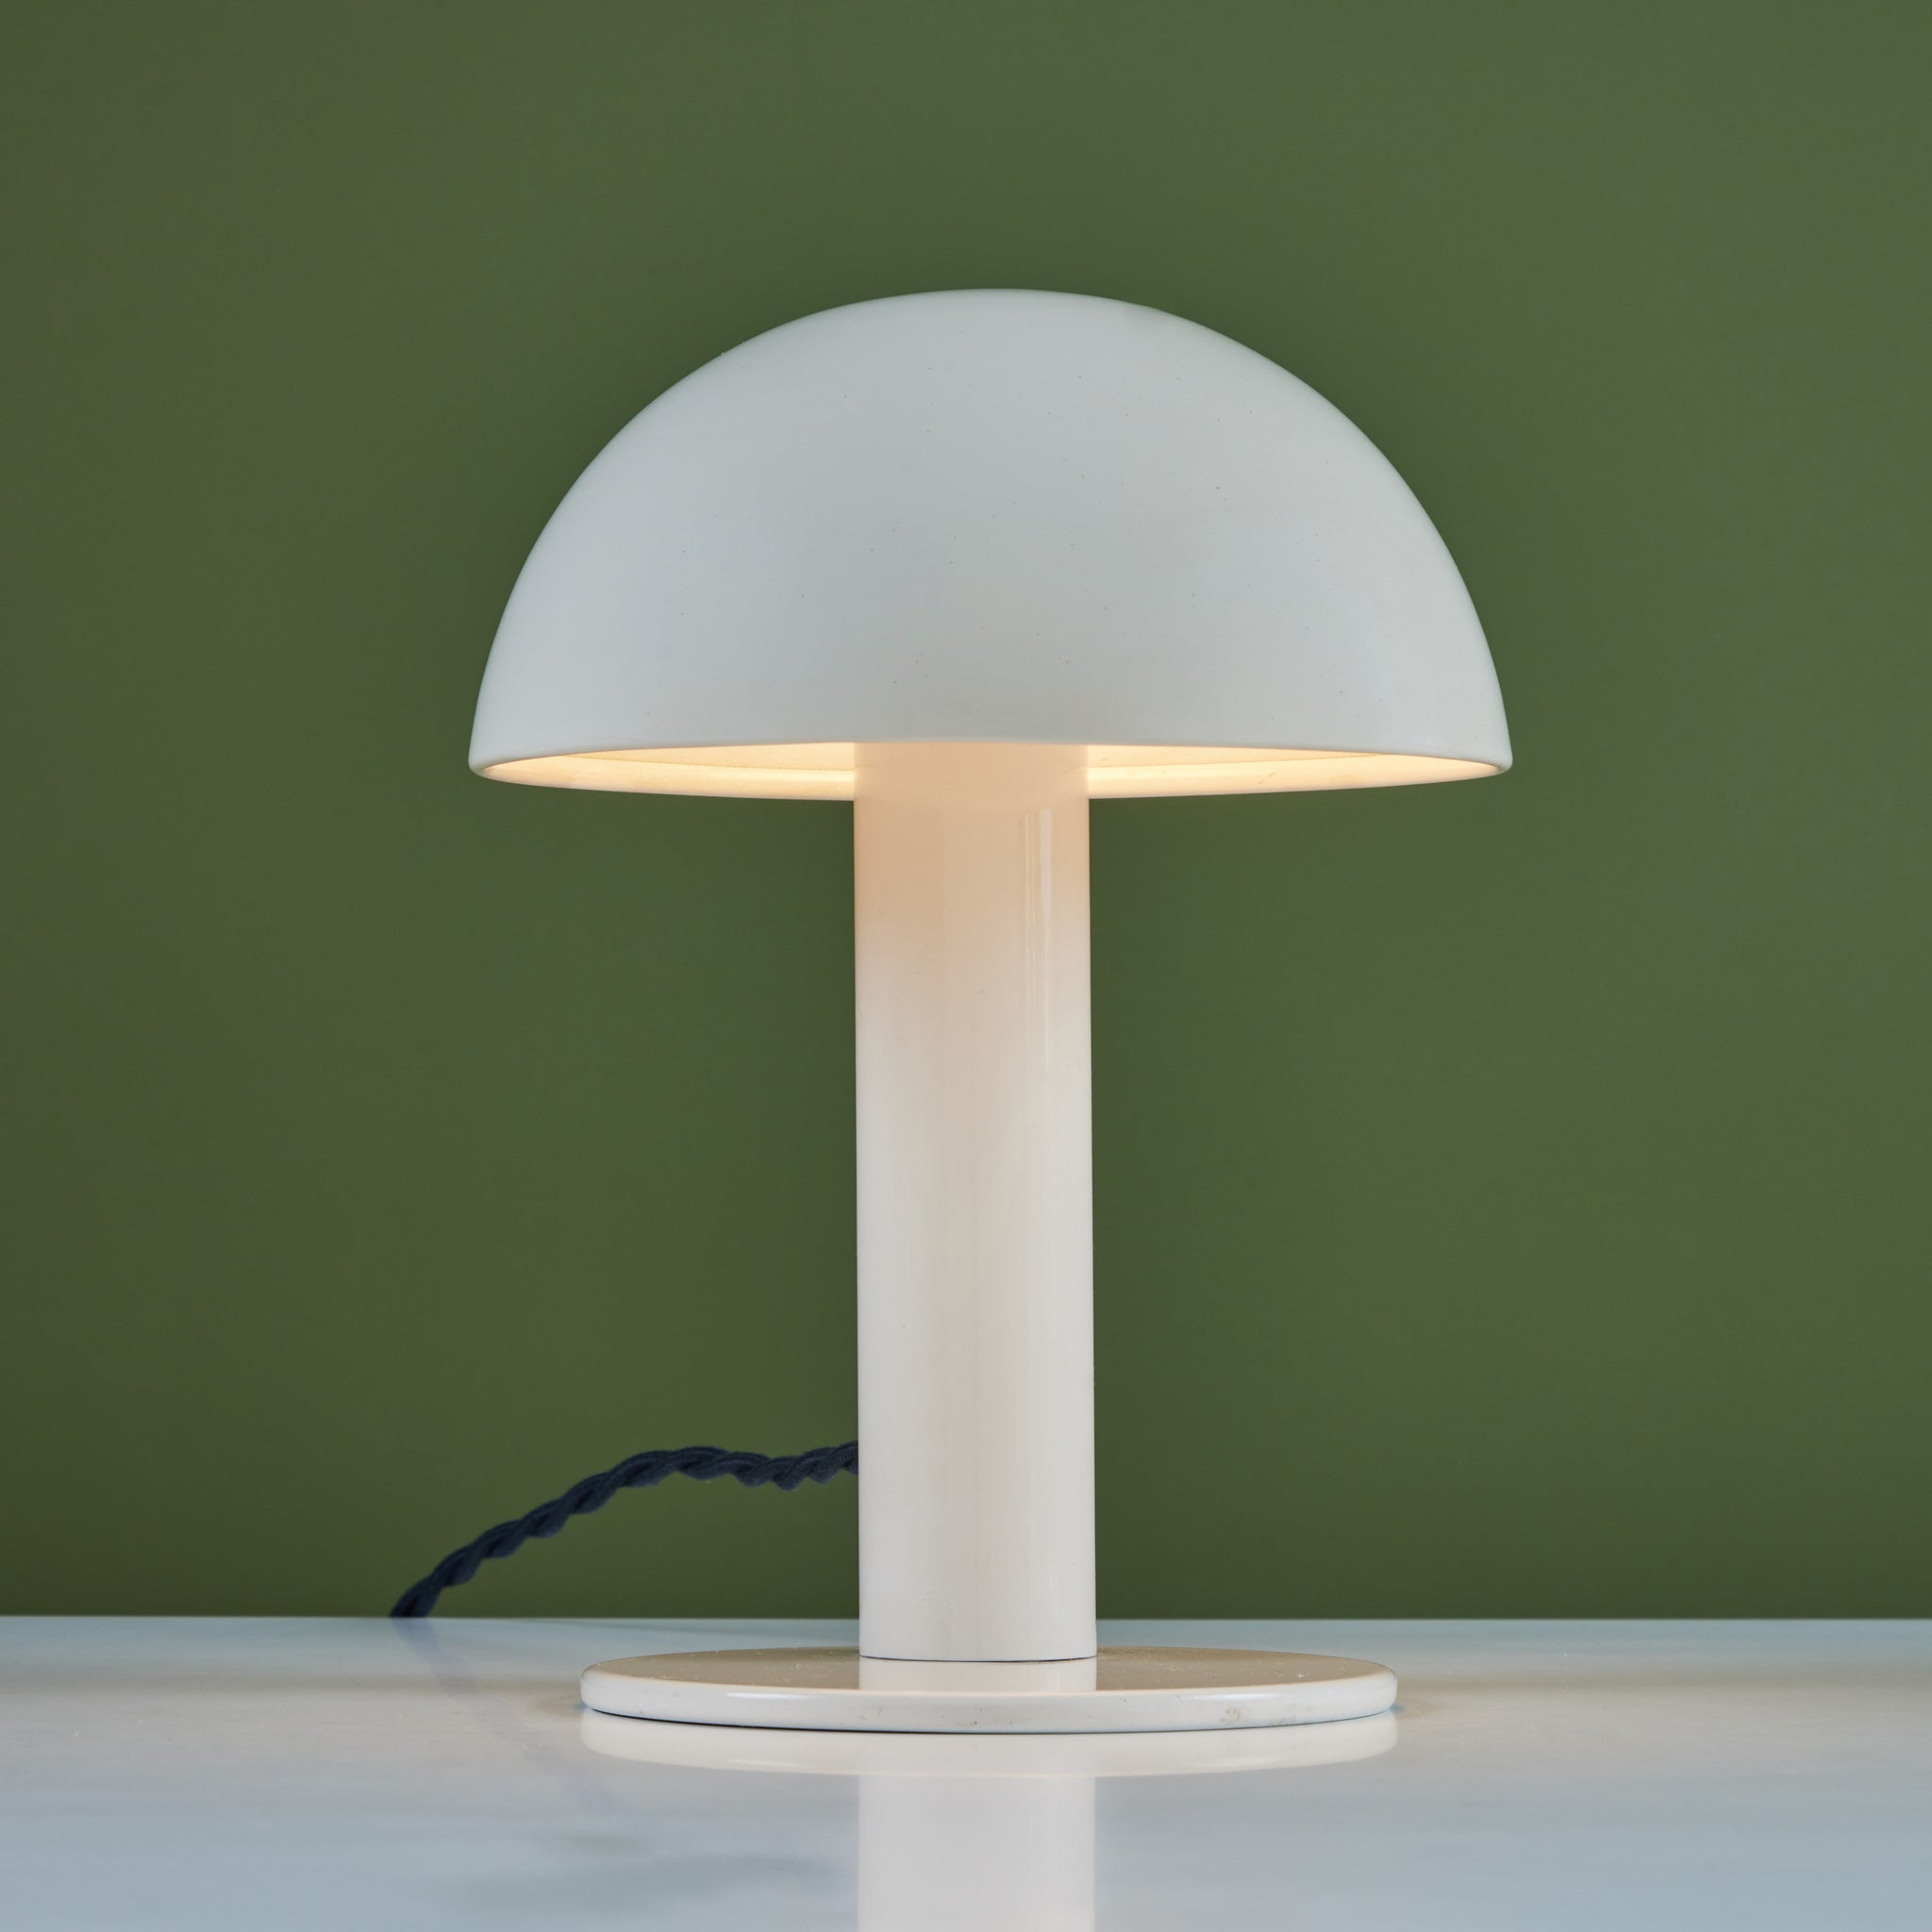 Enameled Mushroom Shade Table Lamp